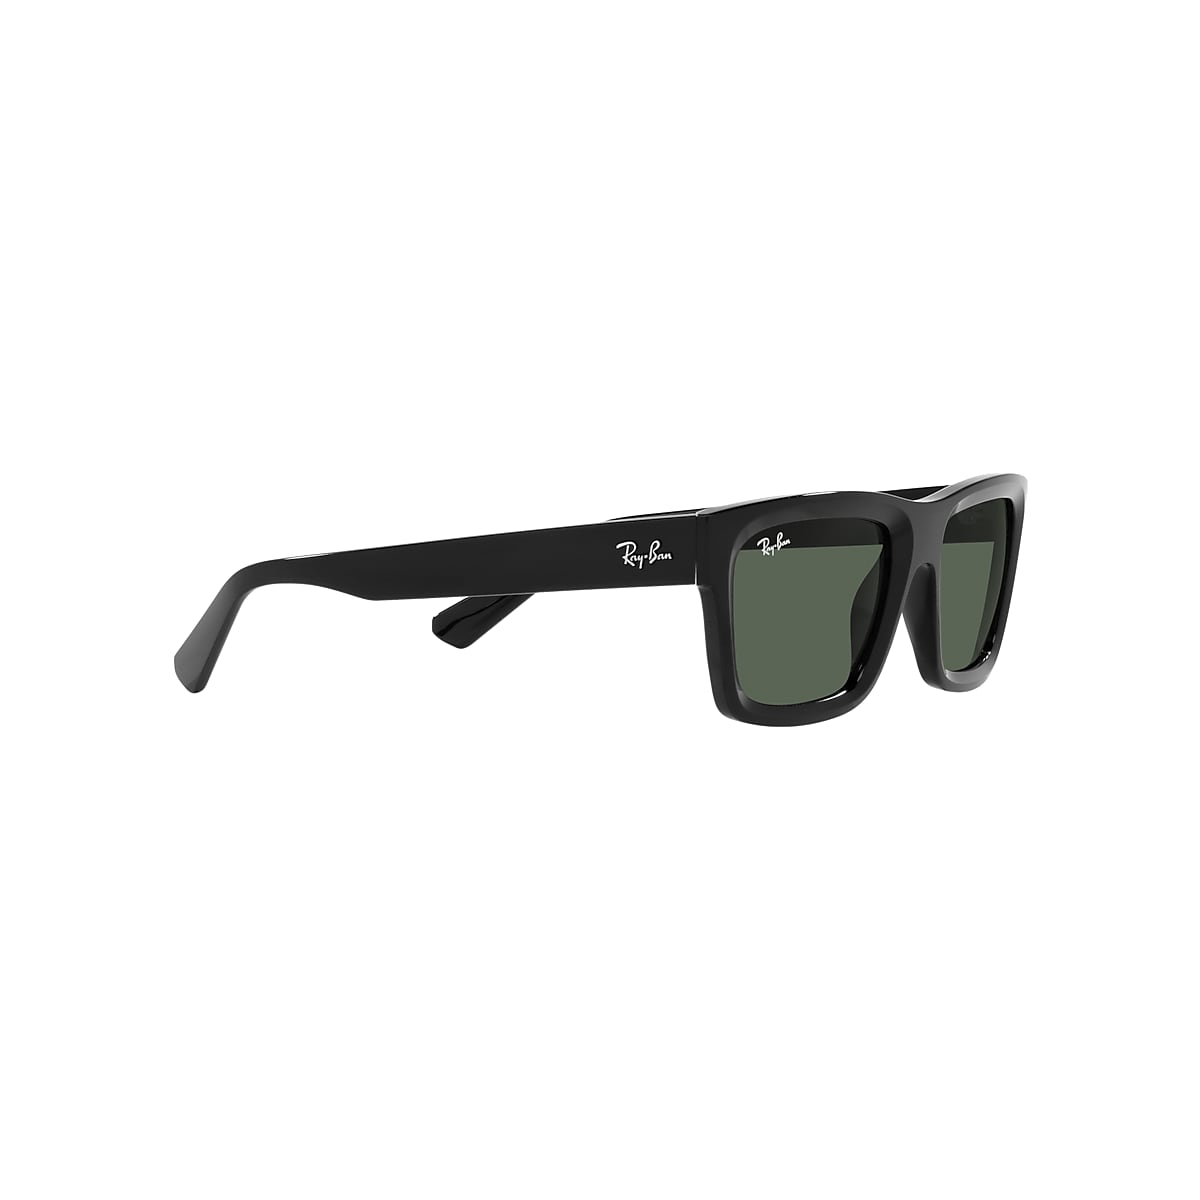 WARREN BIO-BASED Sunglasses in Black and Dark Green - RB4396F 